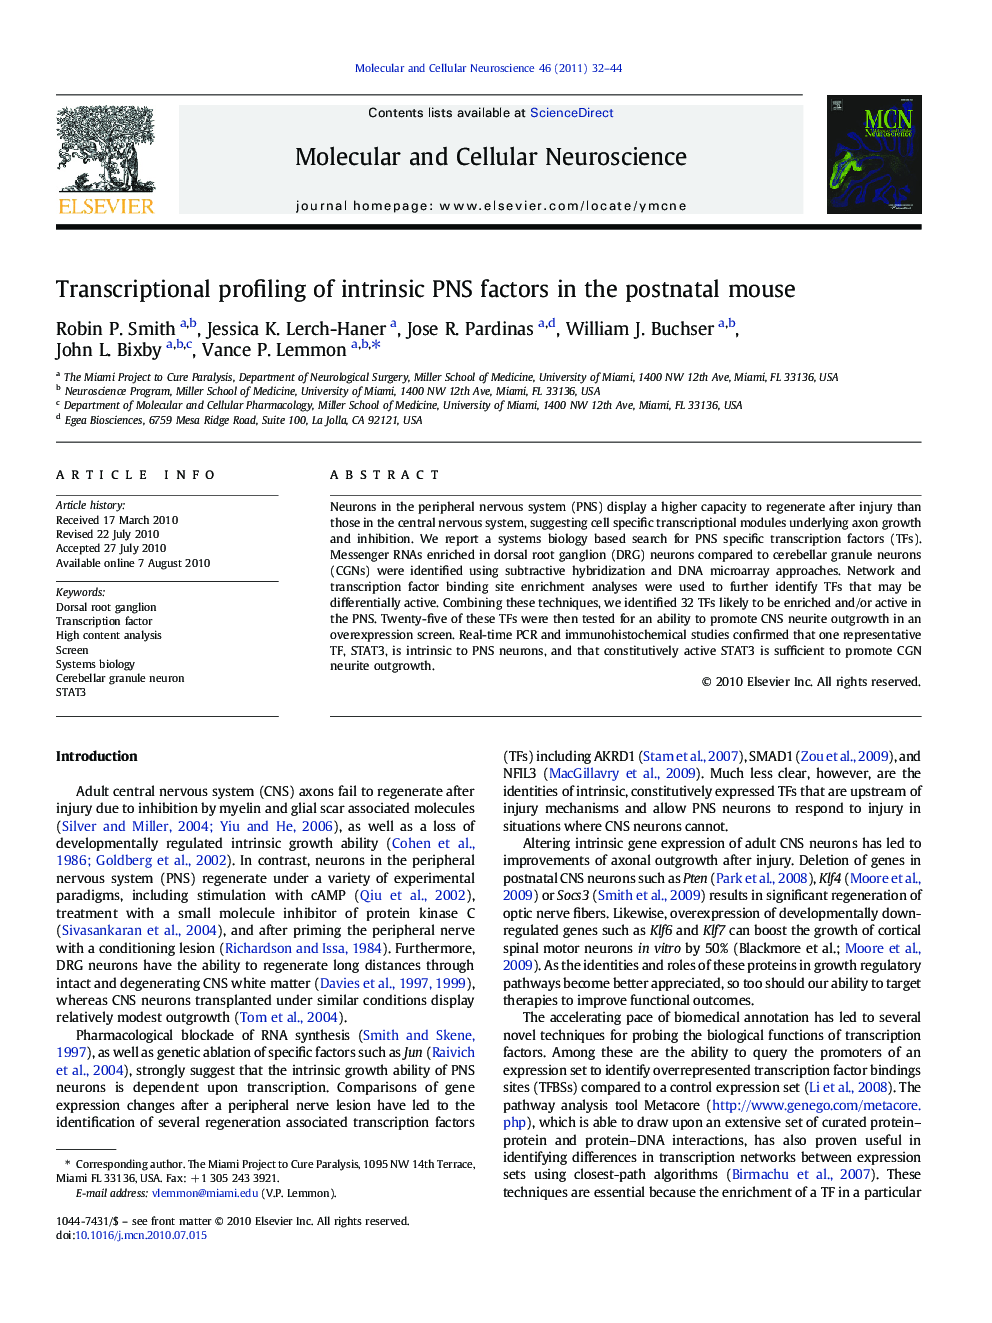 Transcriptional profiling of intrinsic PNS factors in the postnatal mouse